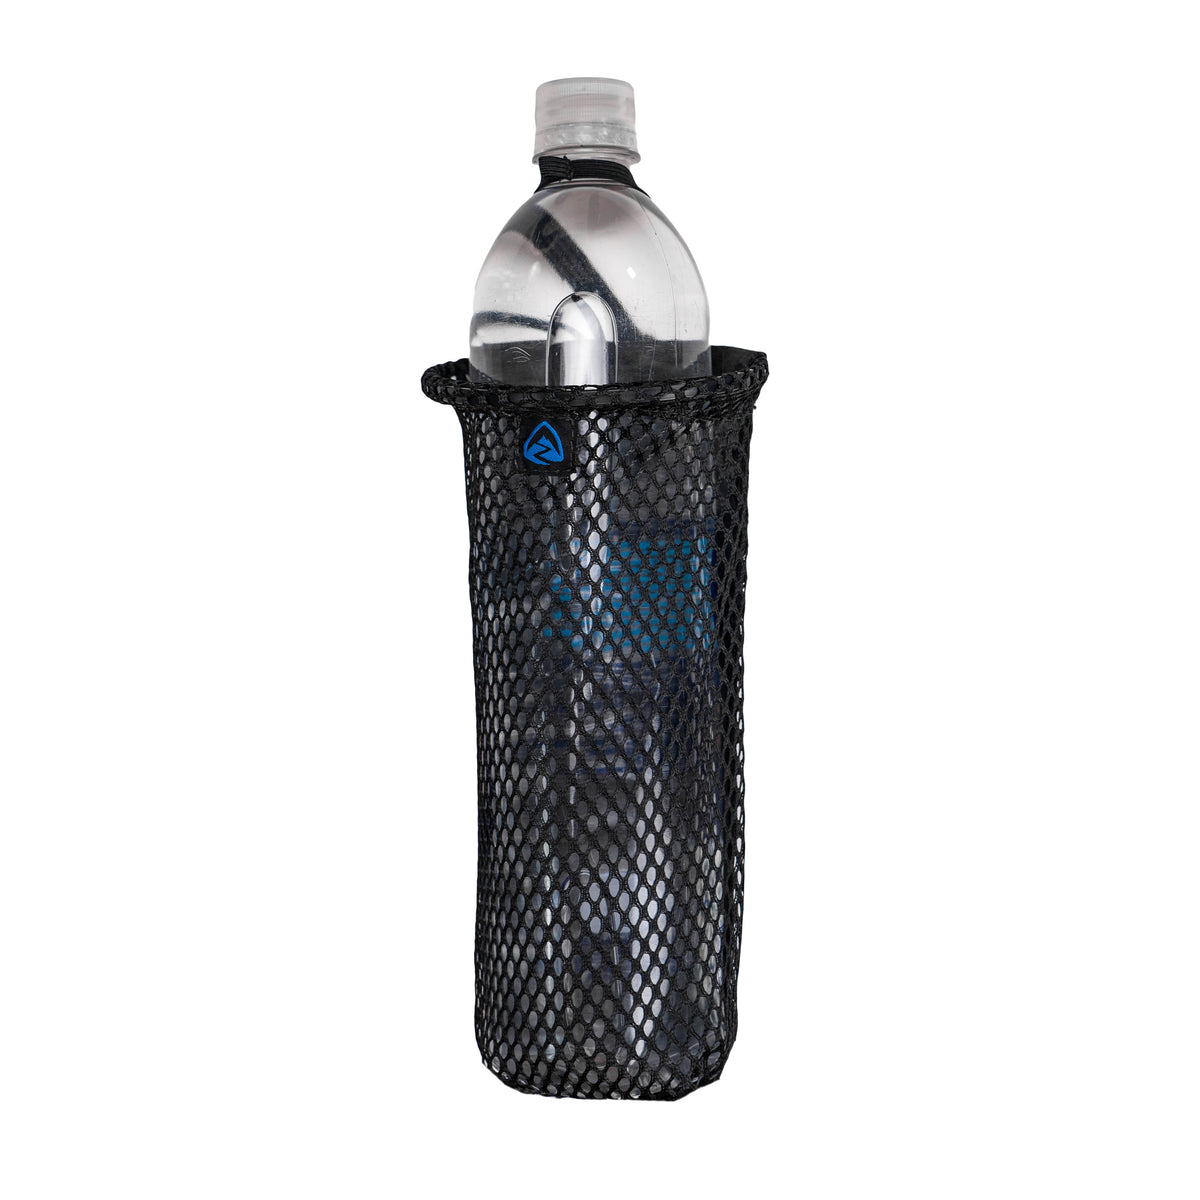 Water Bottle Holder, Can Holder